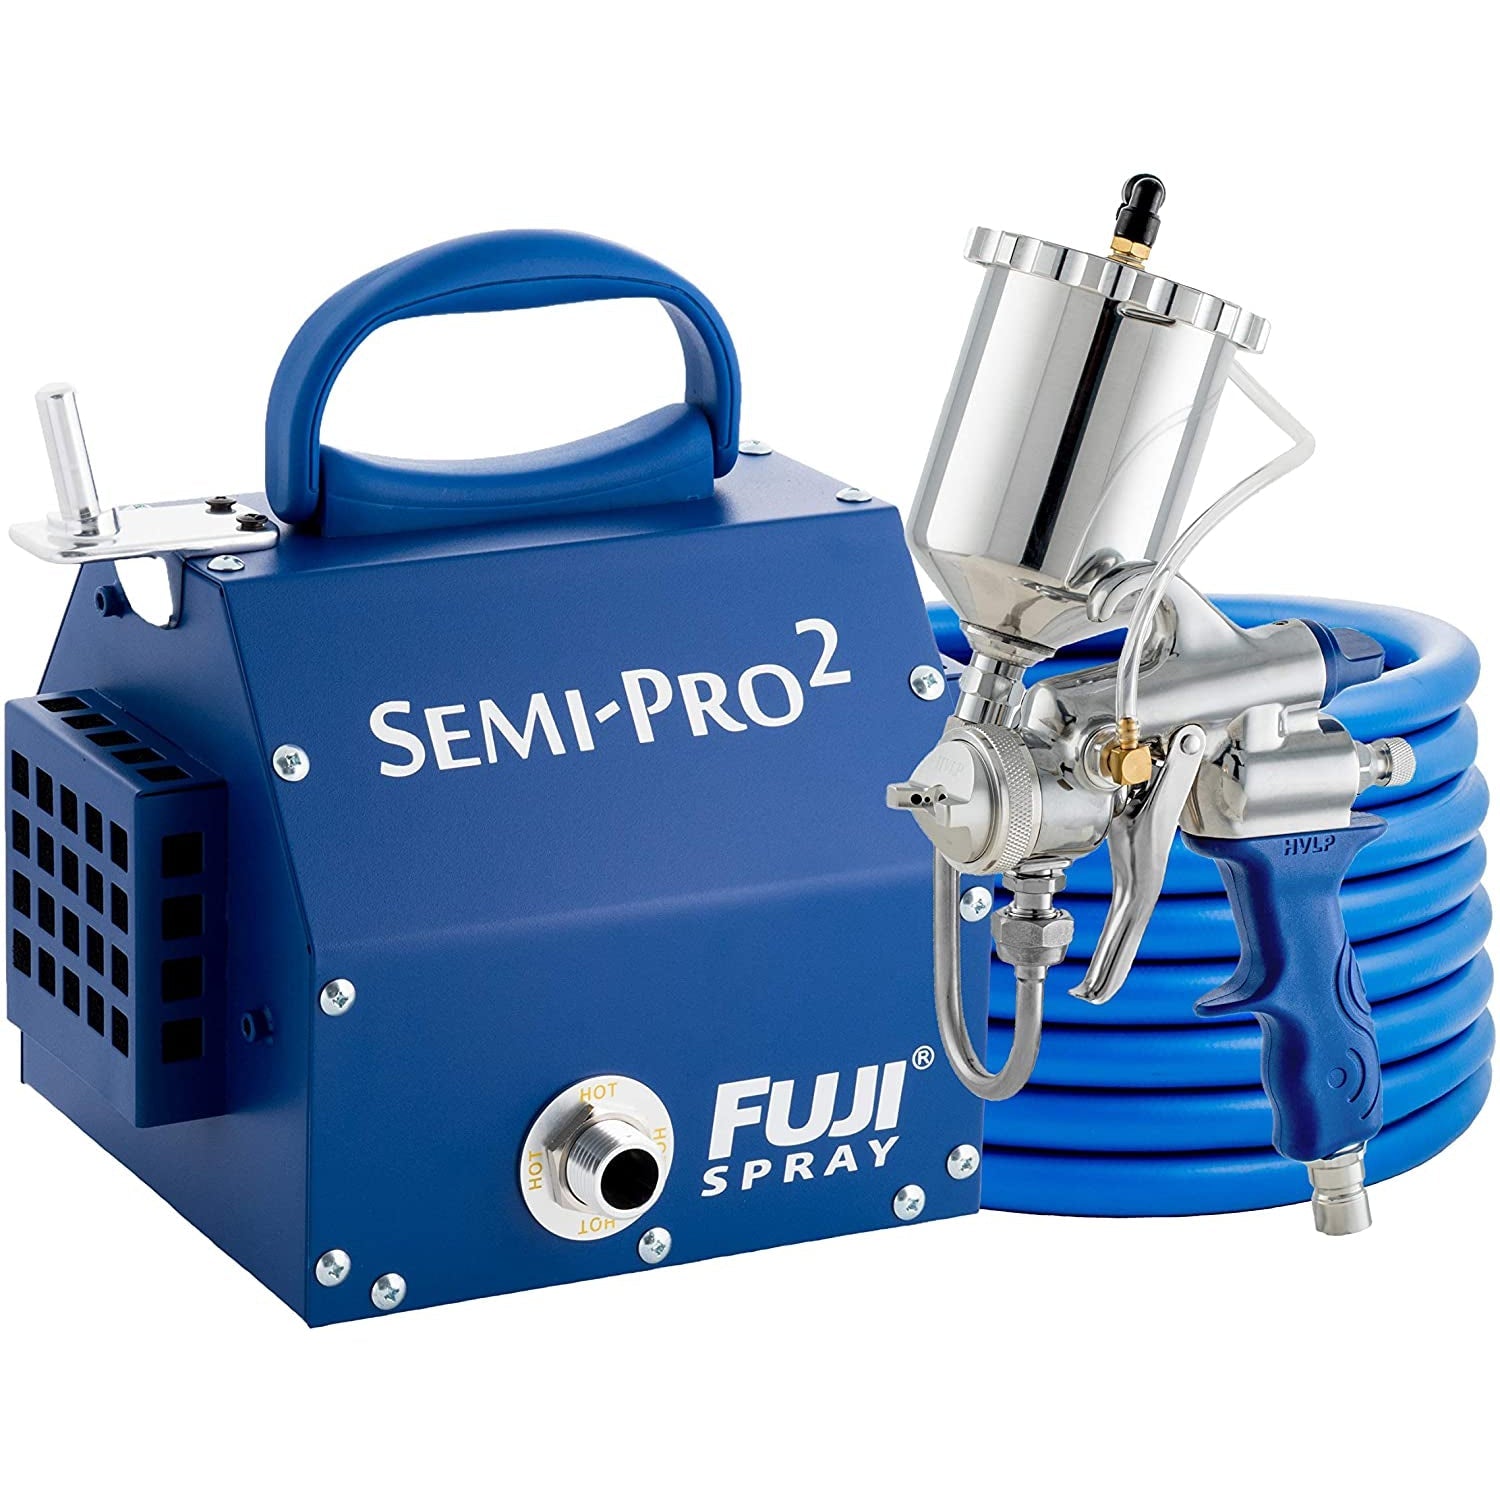 Fuji 2203G Semi-PRO 2 - Gravity HVLP Spray System, Blue - The